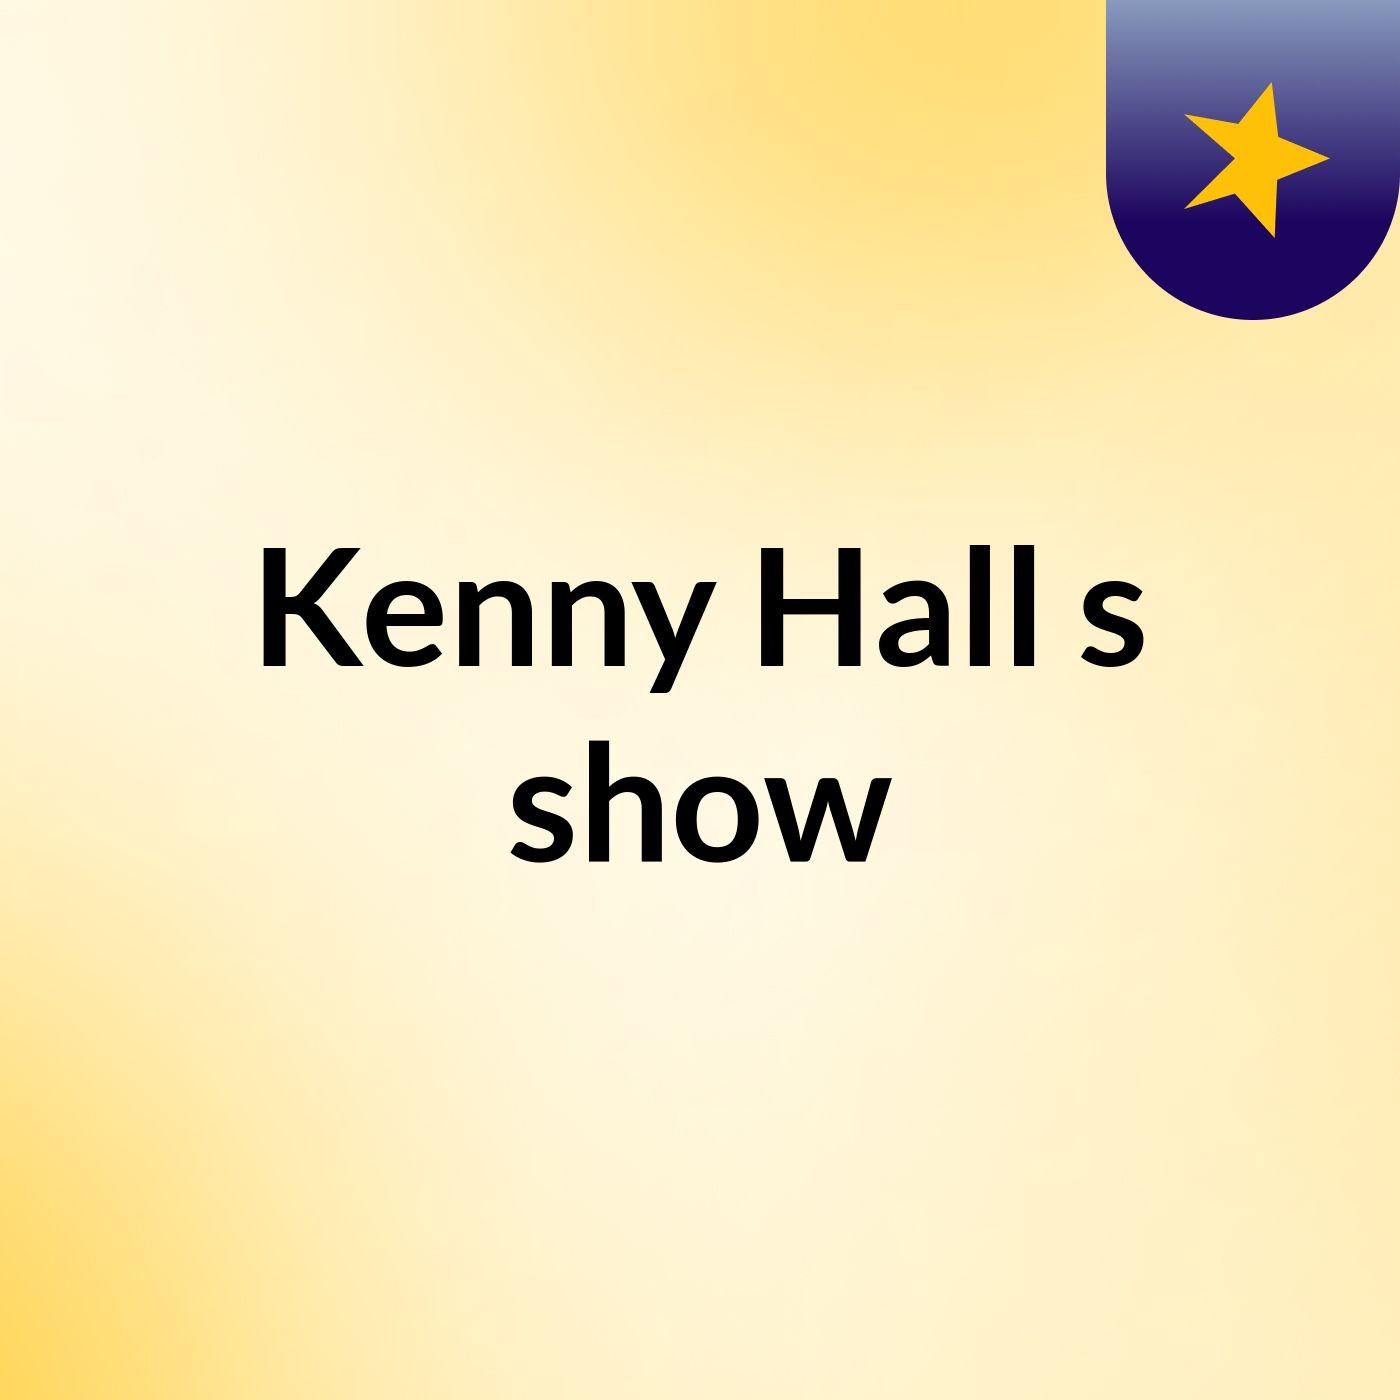 Kenny Hall's show